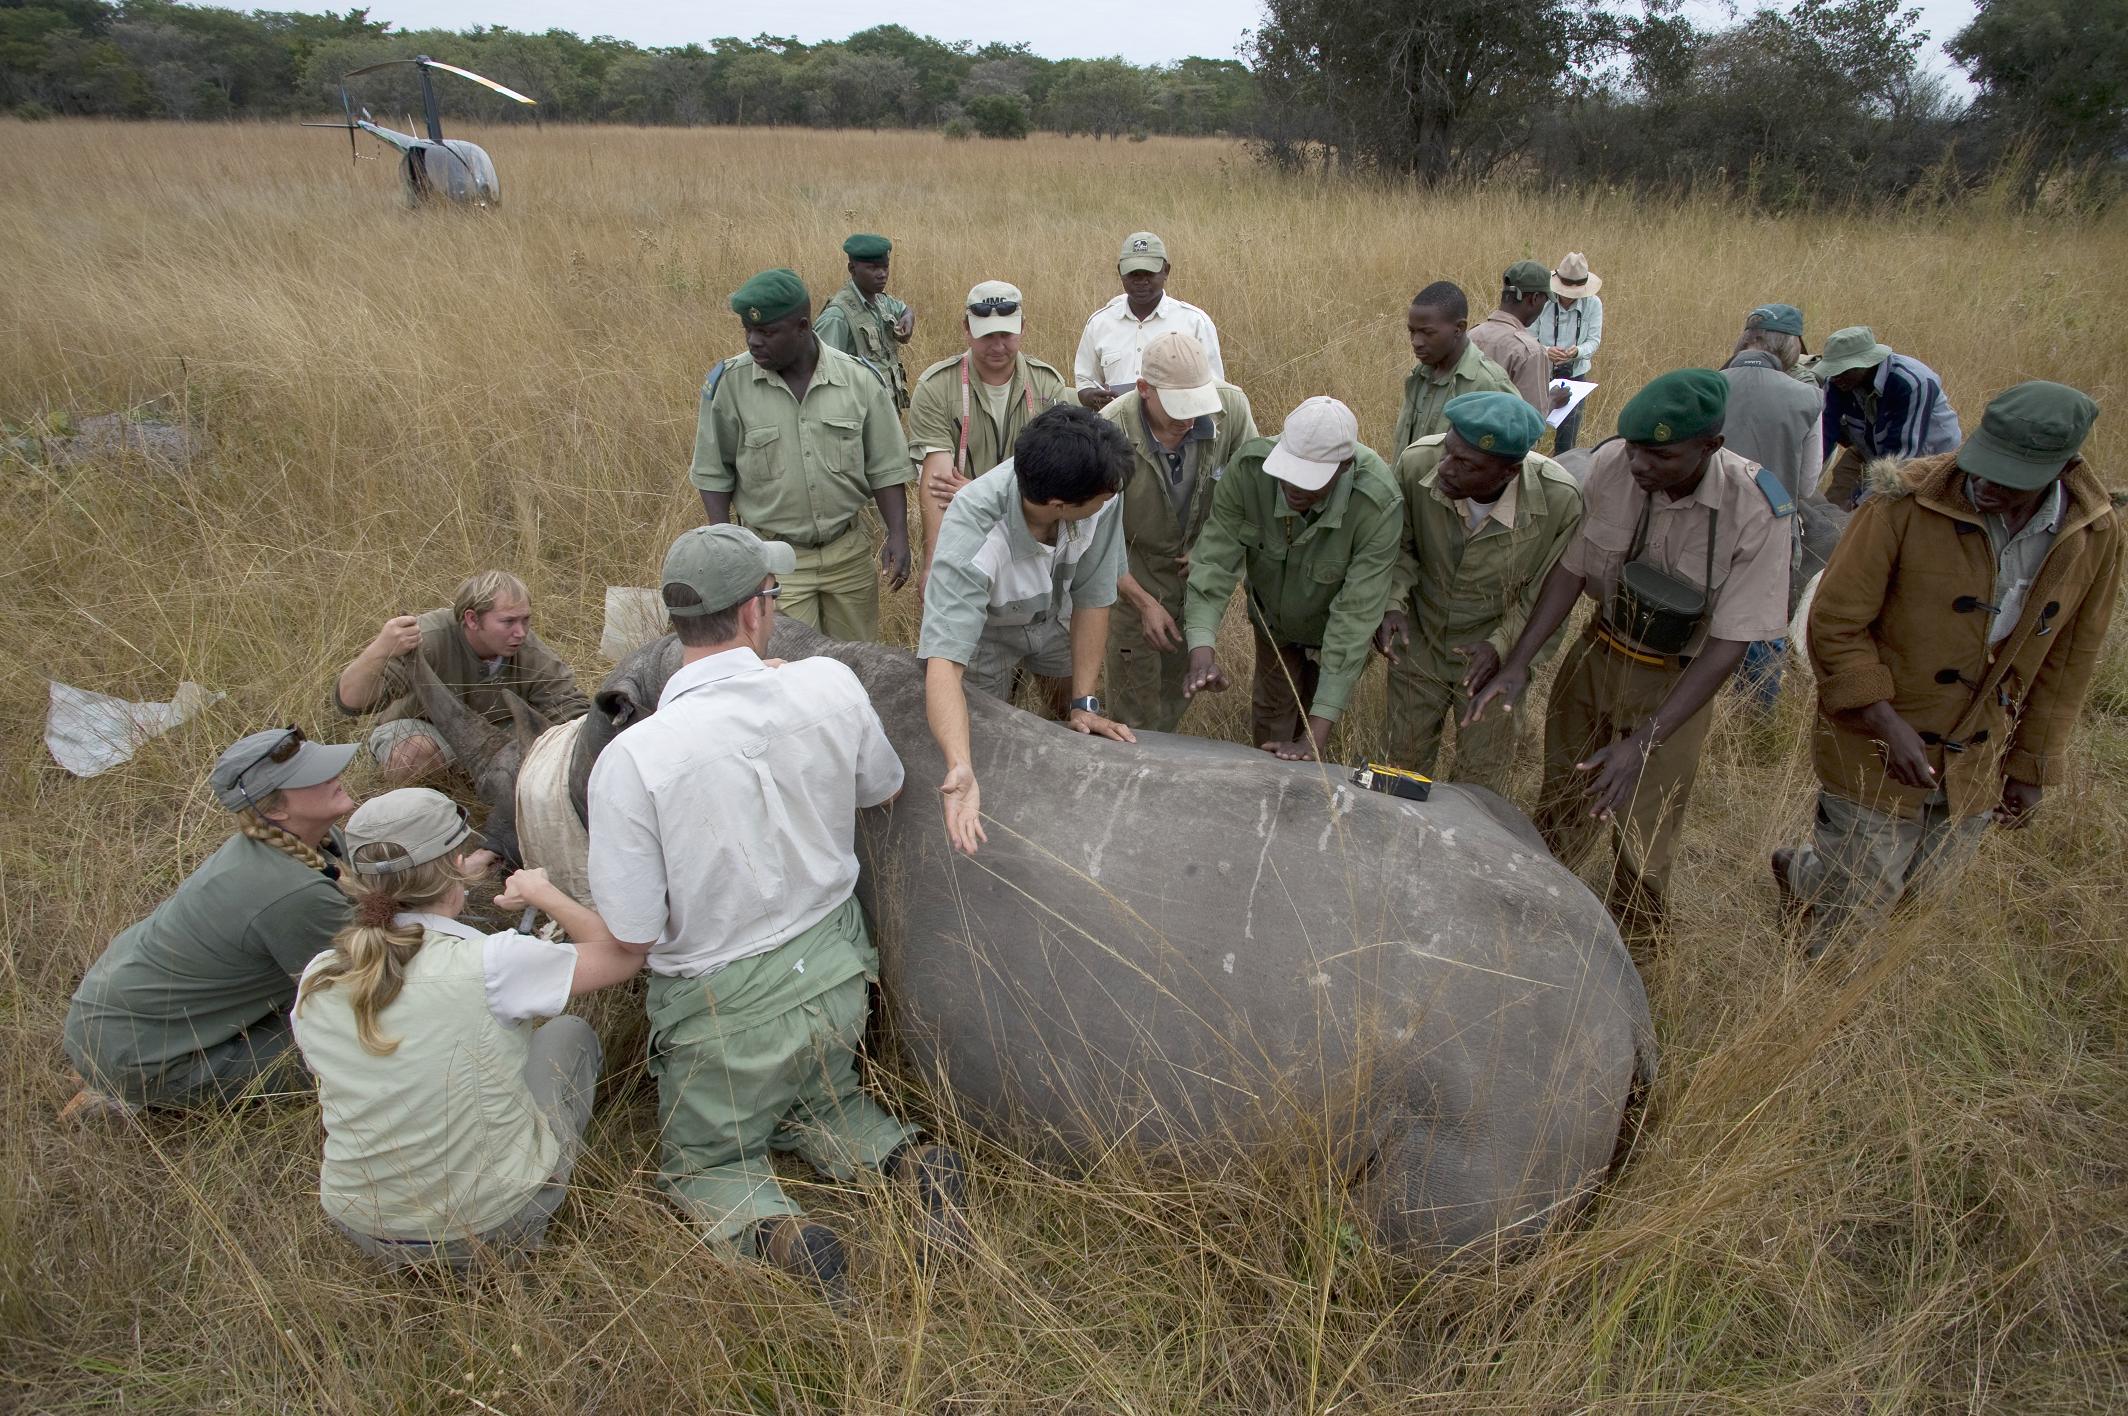 People preparing to roll a rhinoceros